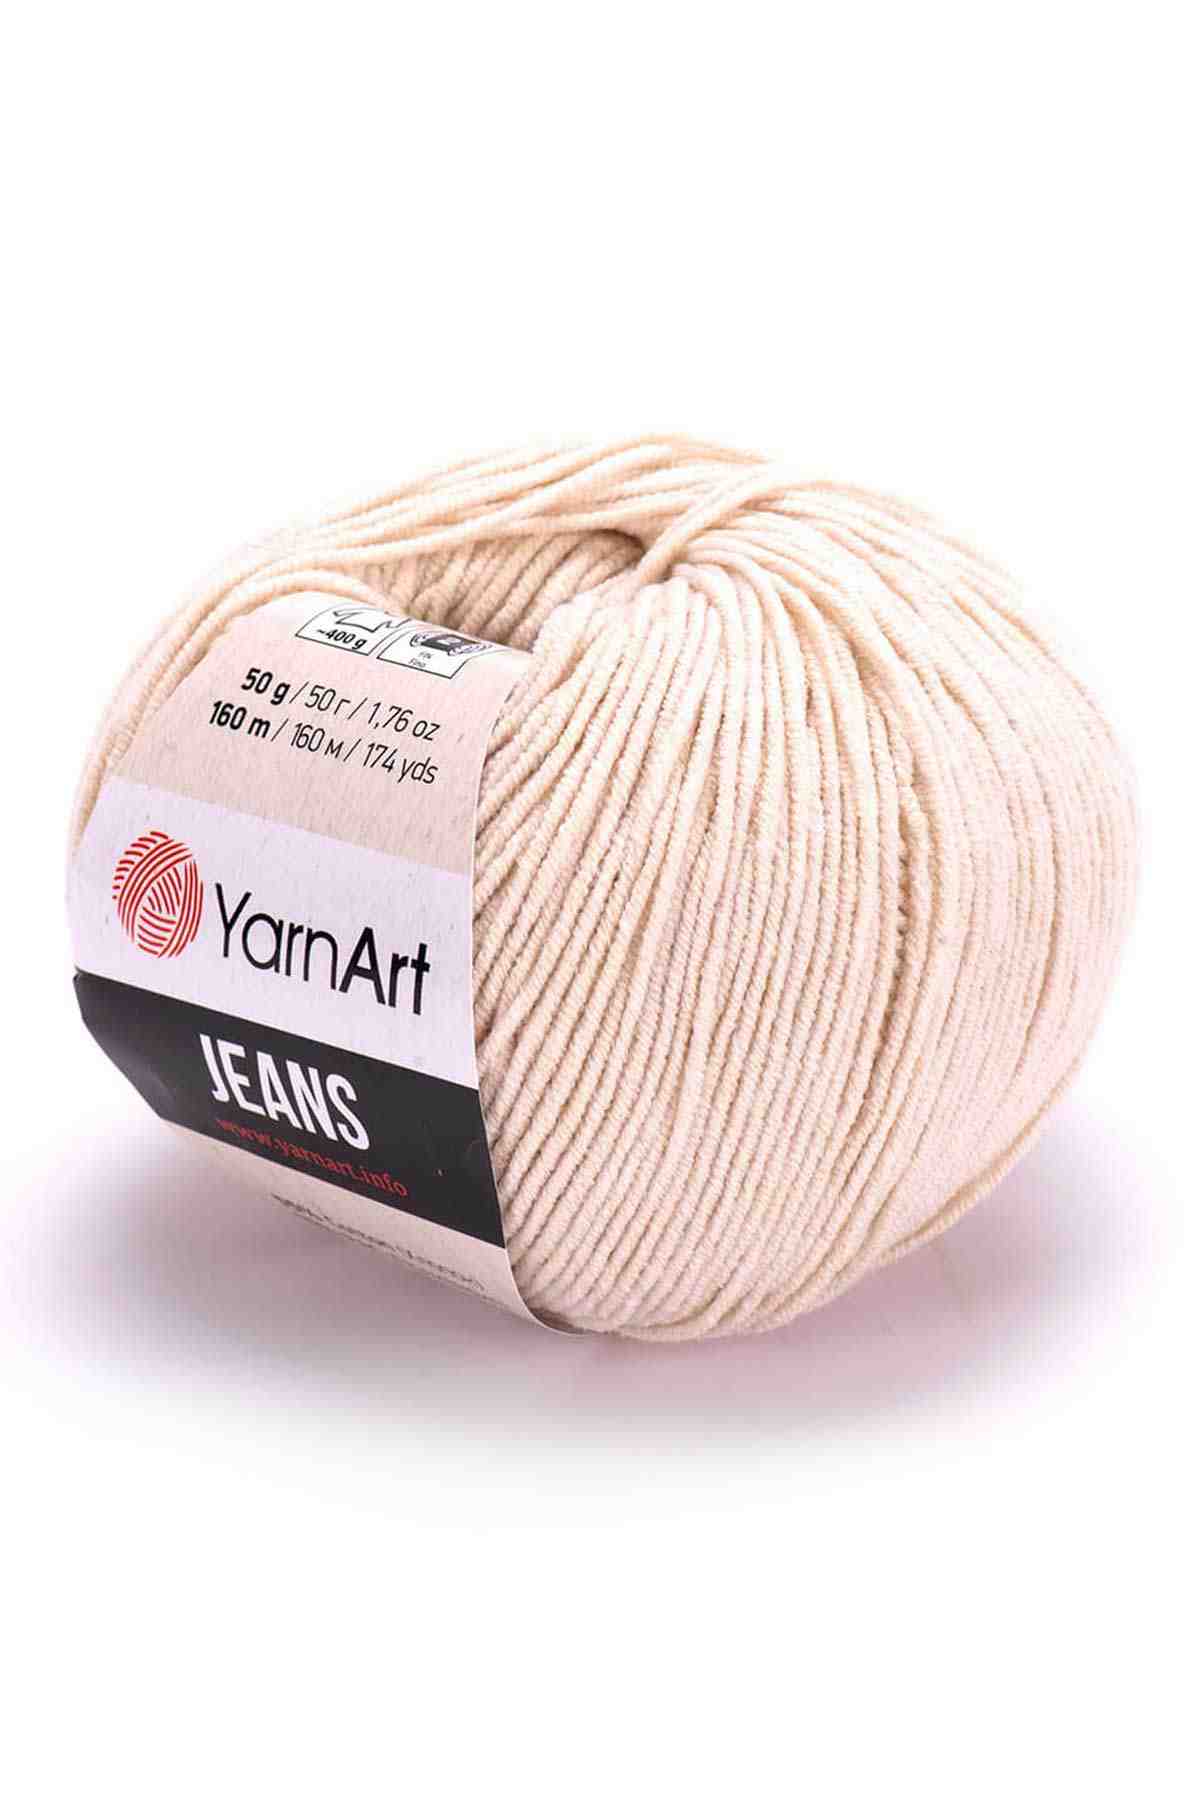 Yarnart Jeans Cotton Yarn